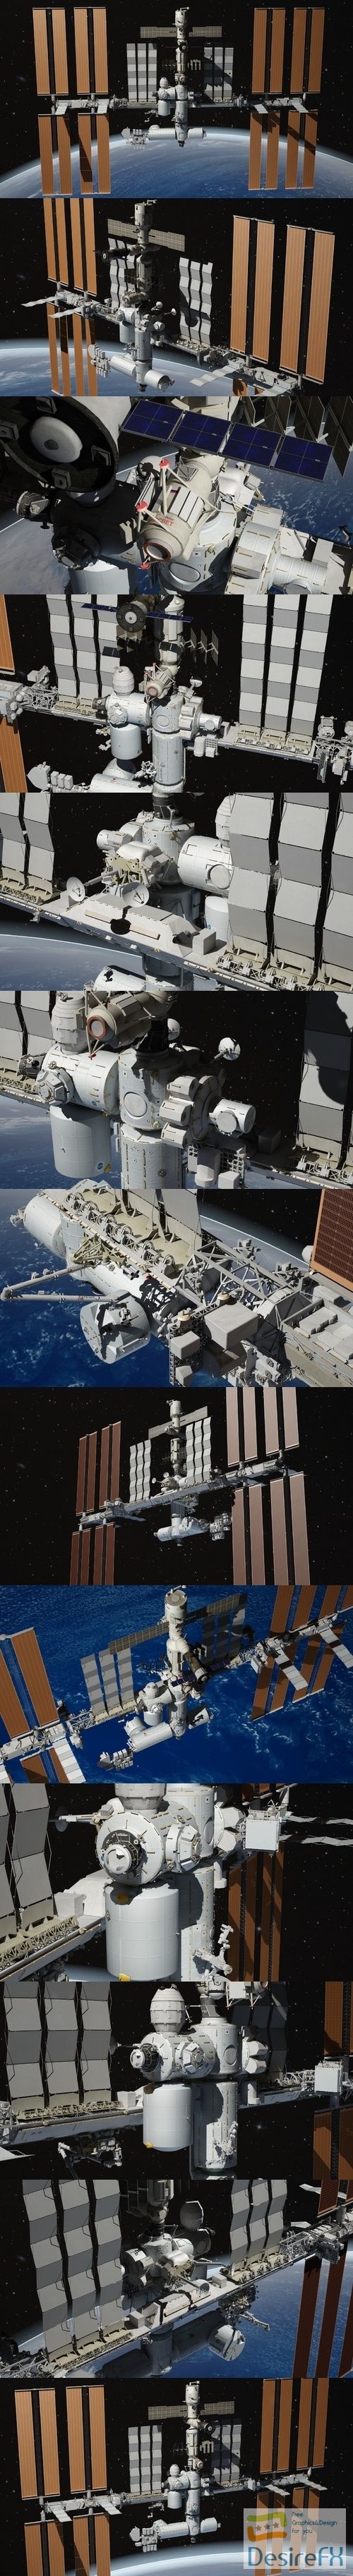 NASA International Space Station 3D Model